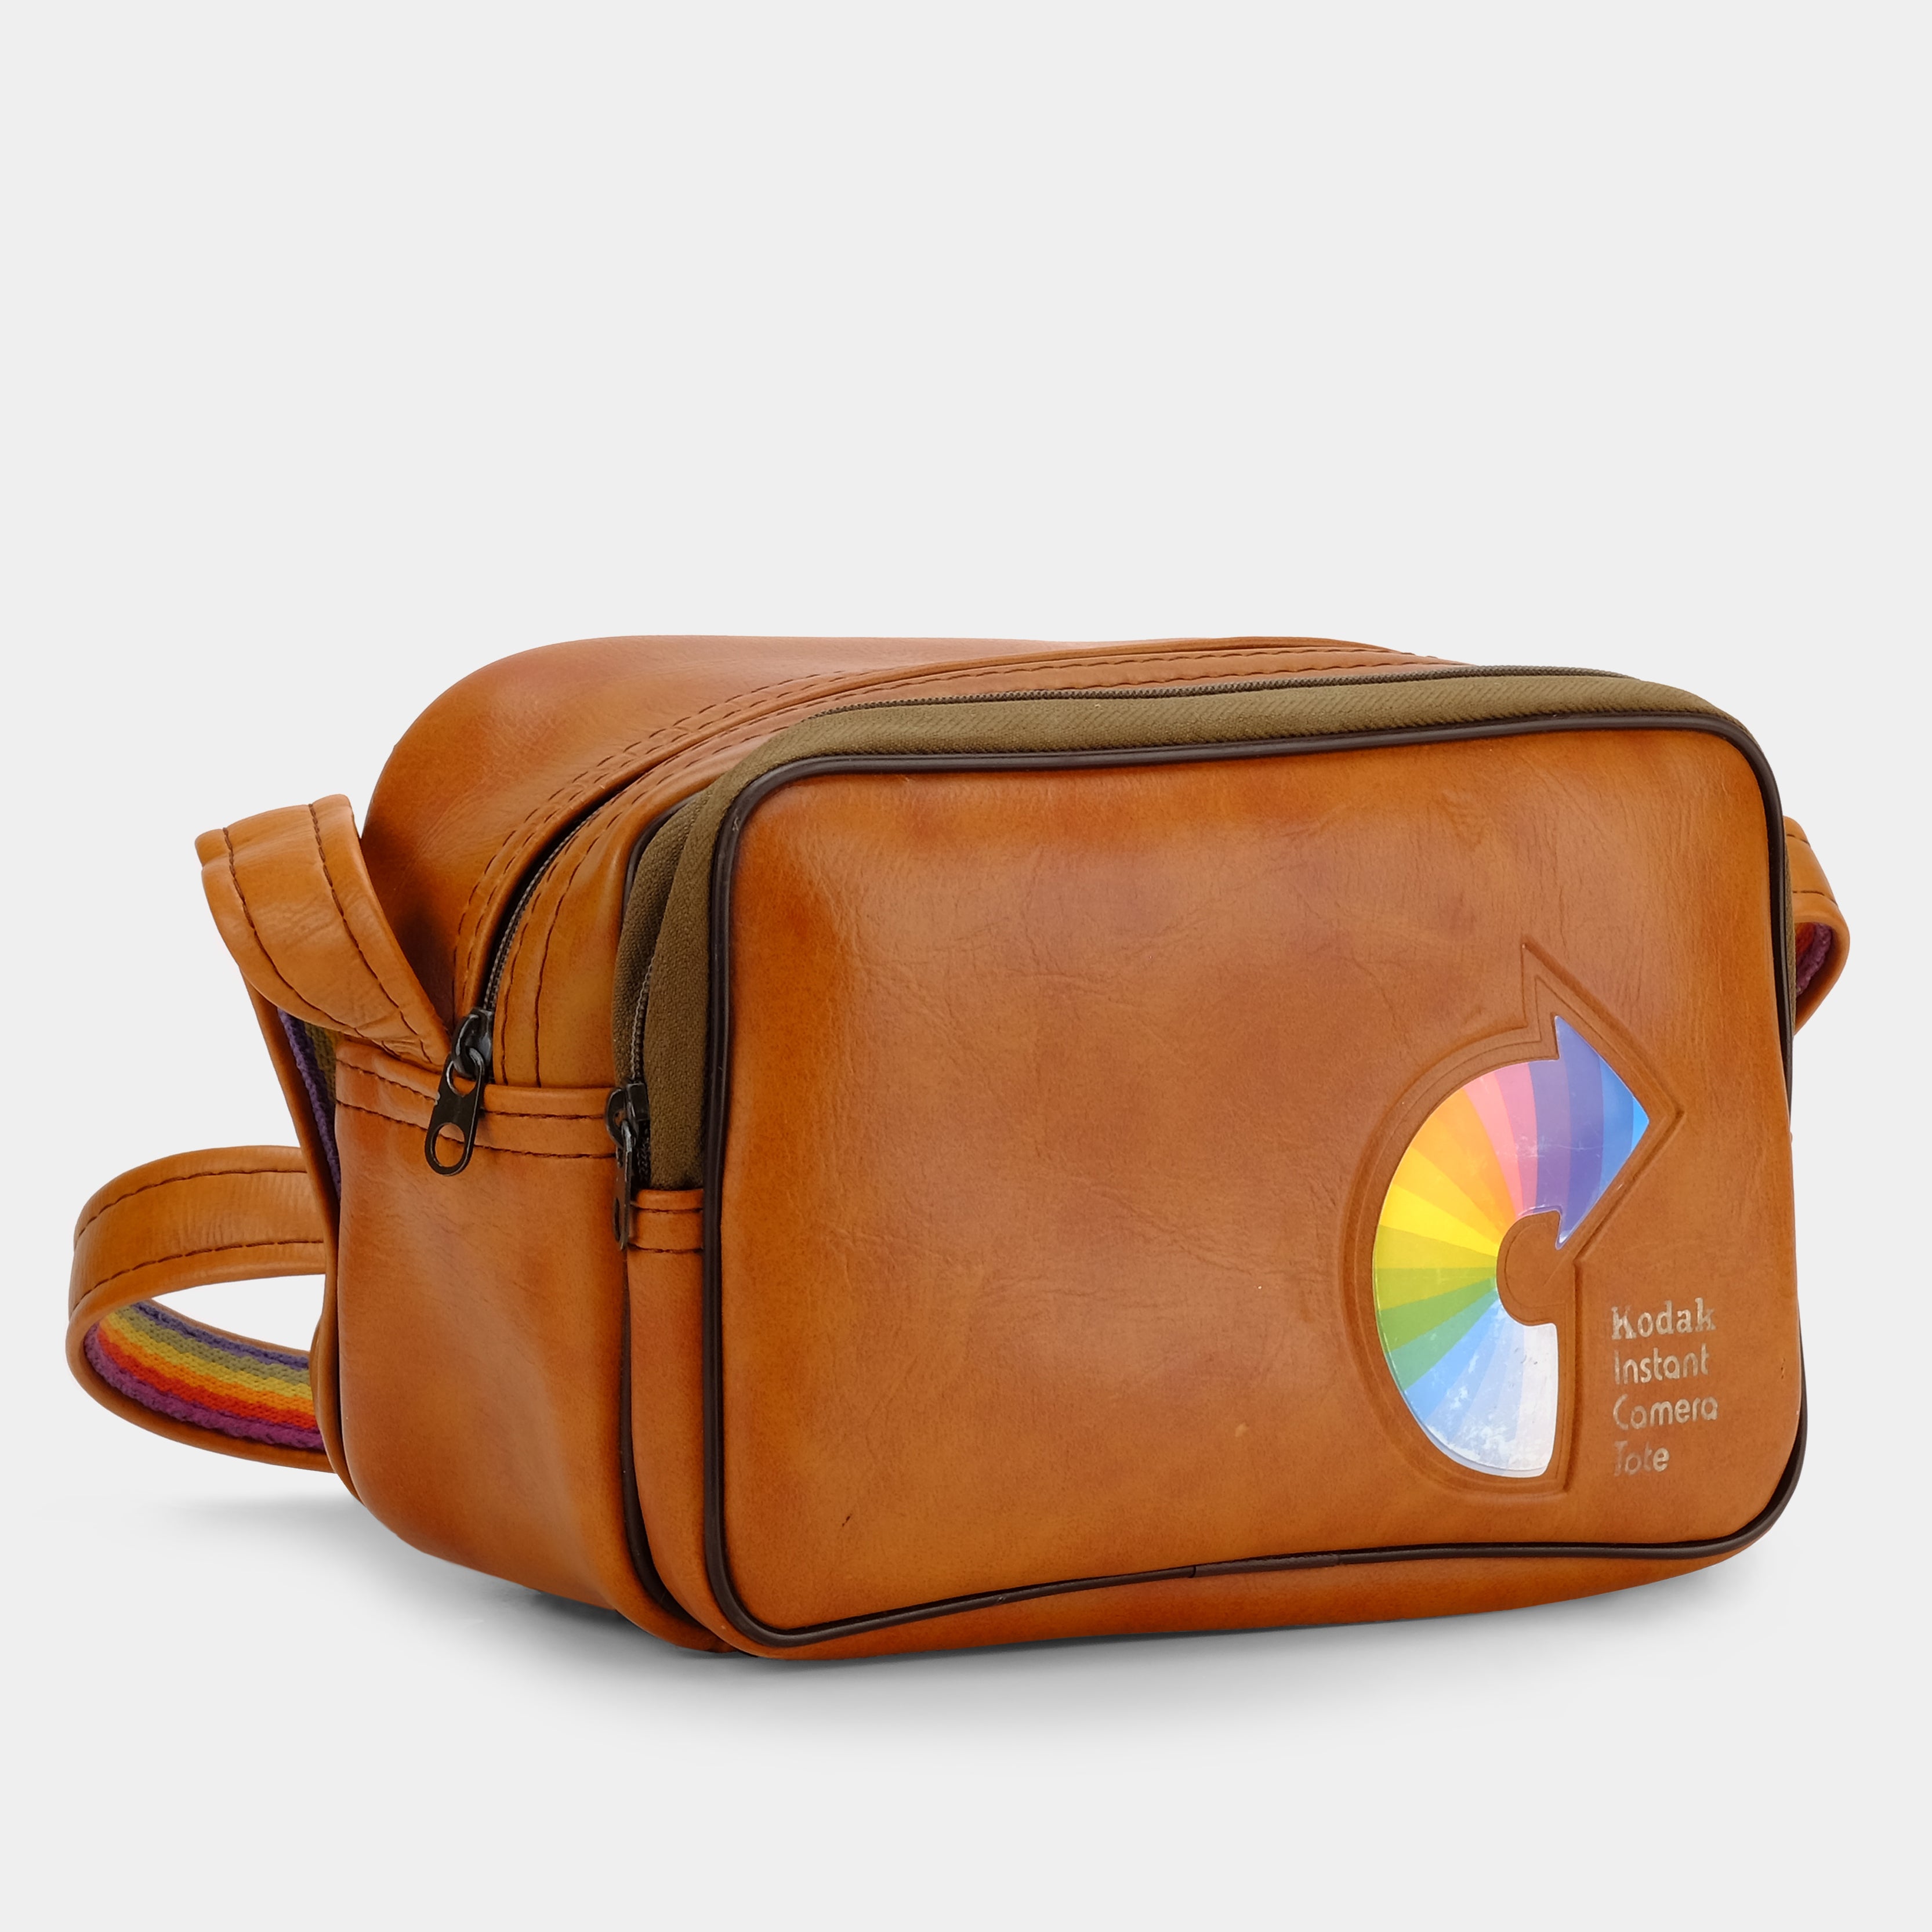 Kodak Brown Leather Camera Bag with Rainbow Strap